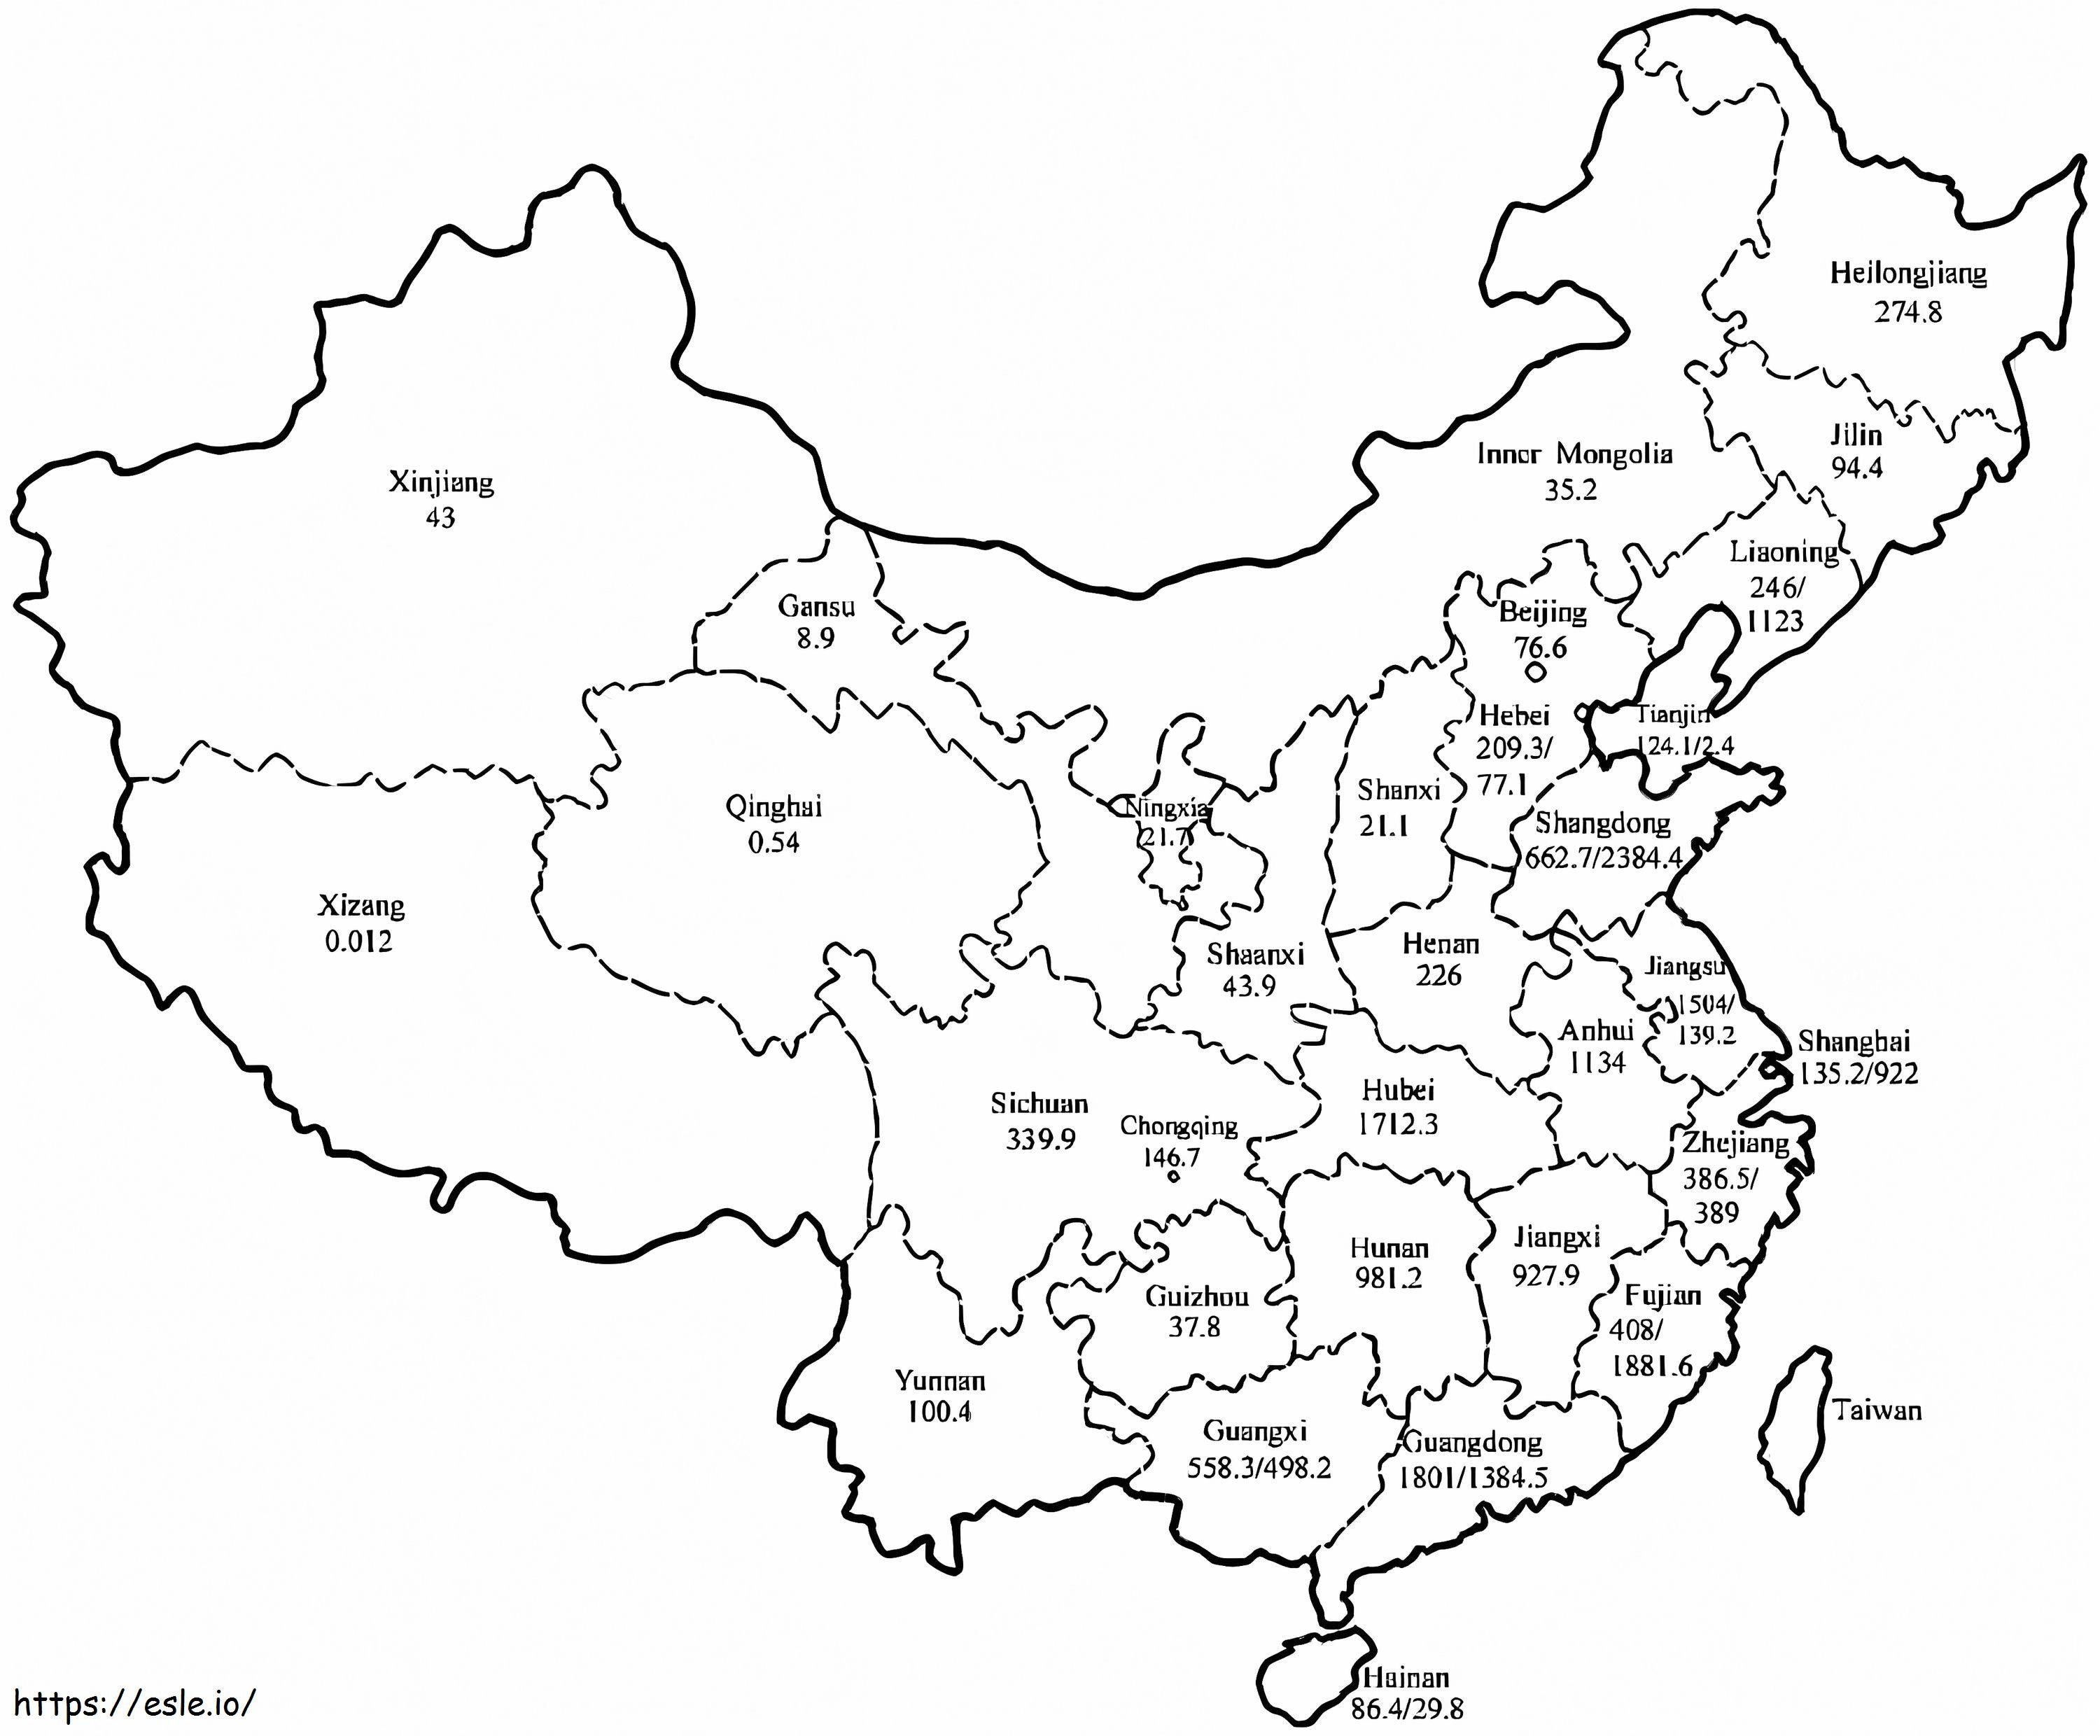 Mapa de China para colorear